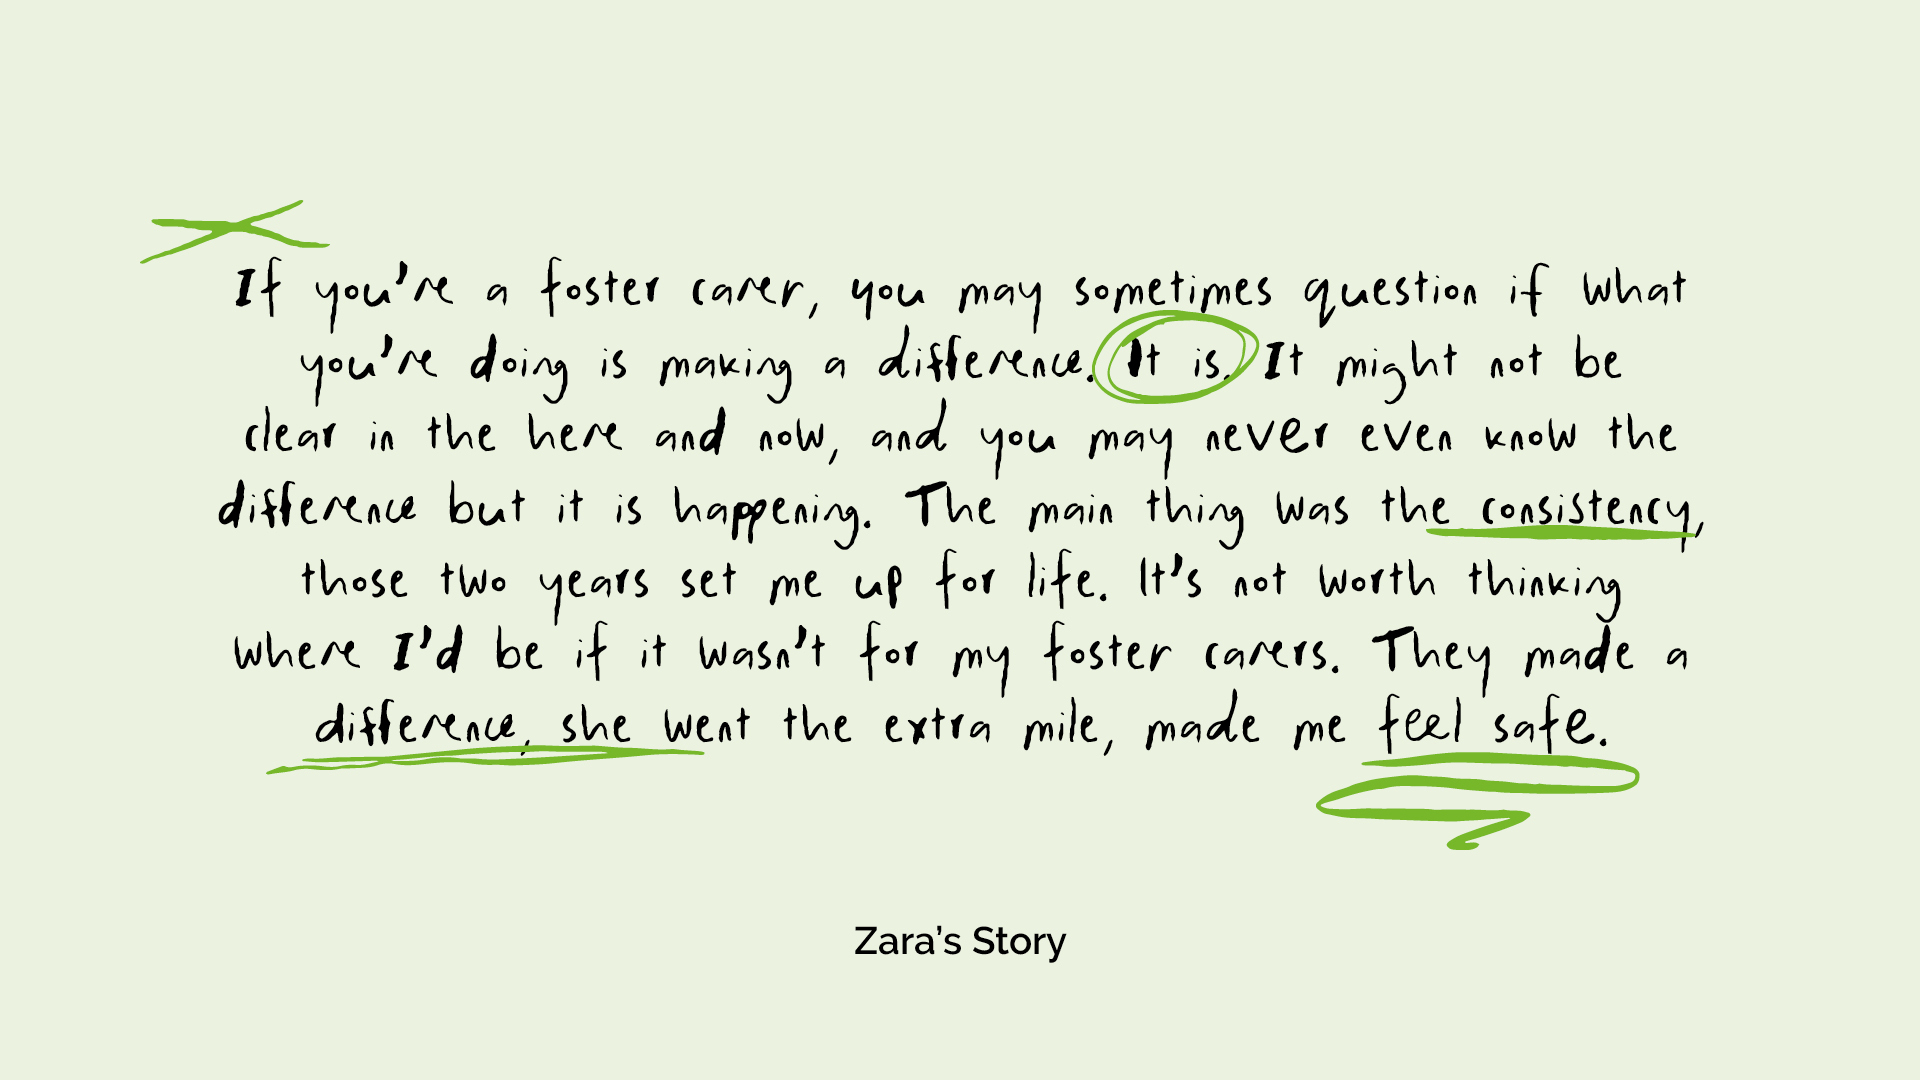 Zara's Story